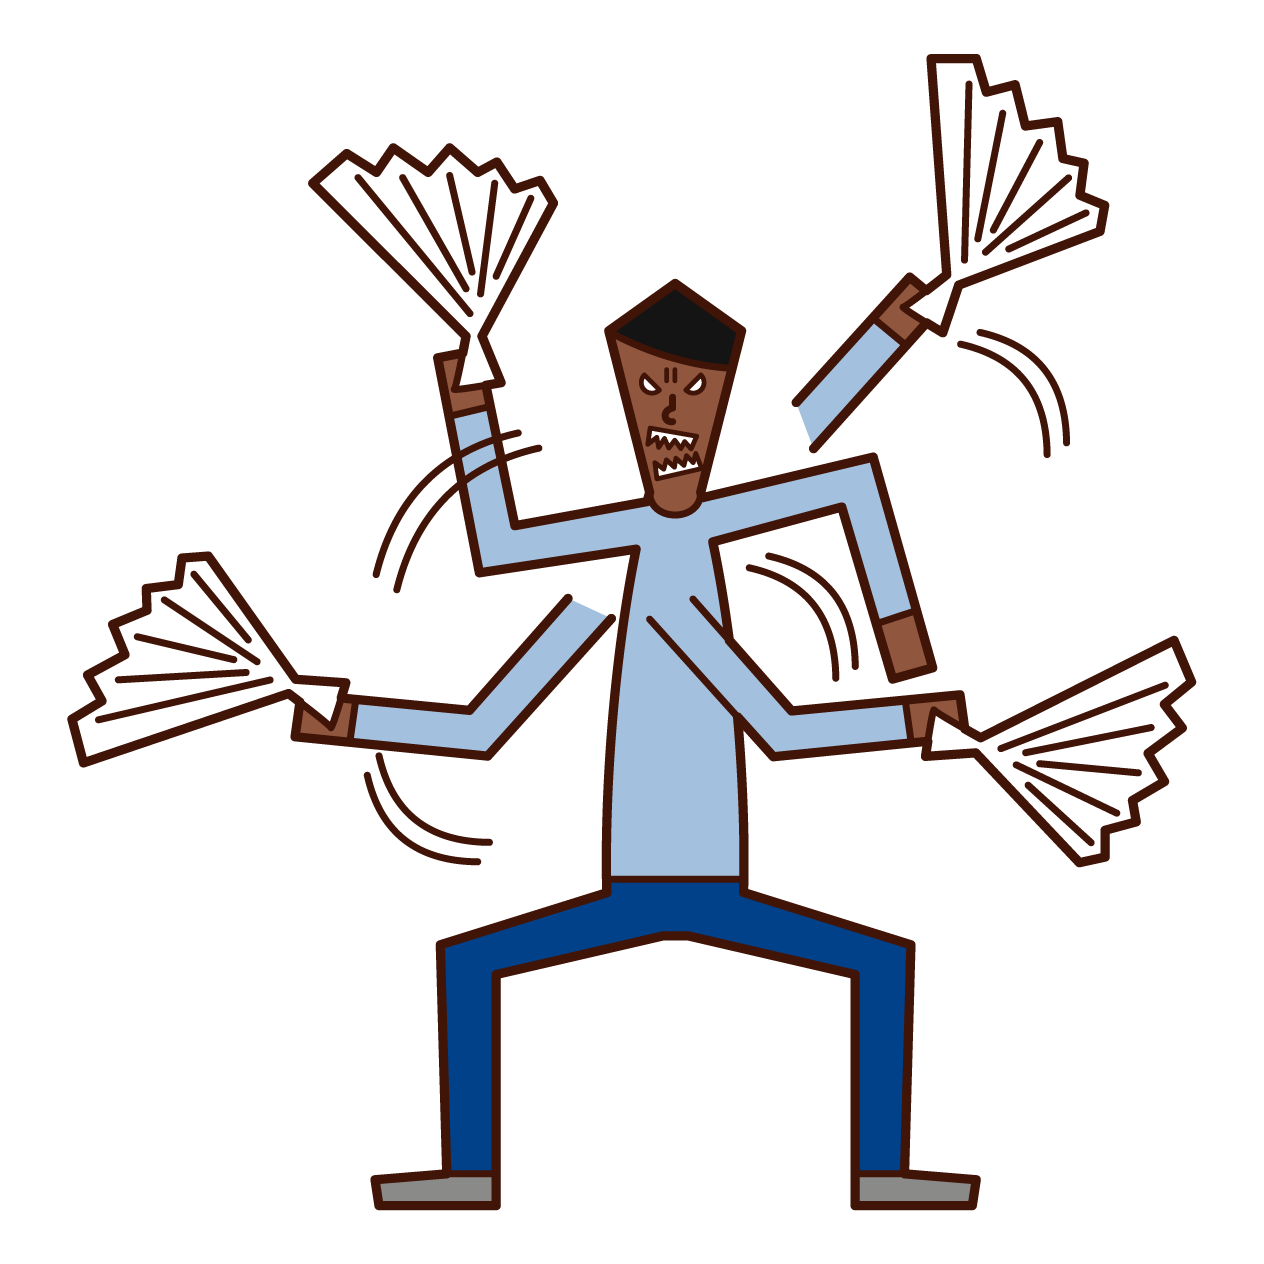 Illustration of a man wielding Harisen